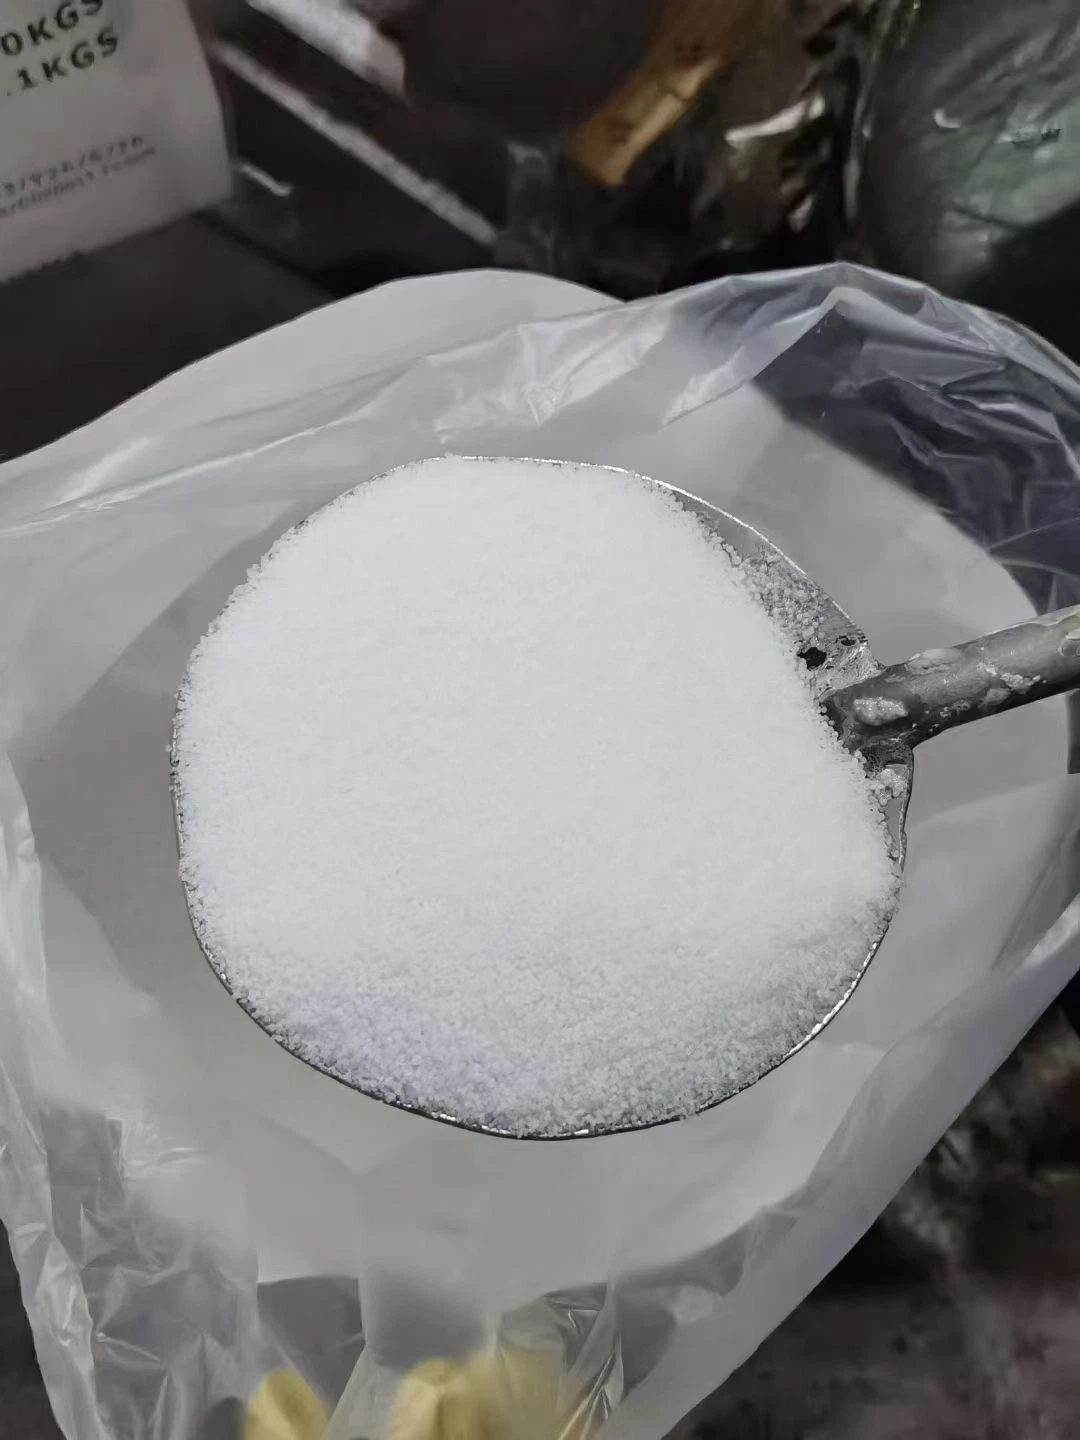 Sodium Hydroxide Caustic Soda Pearls Flake 99% Naoh CAS No: 1310-72-2